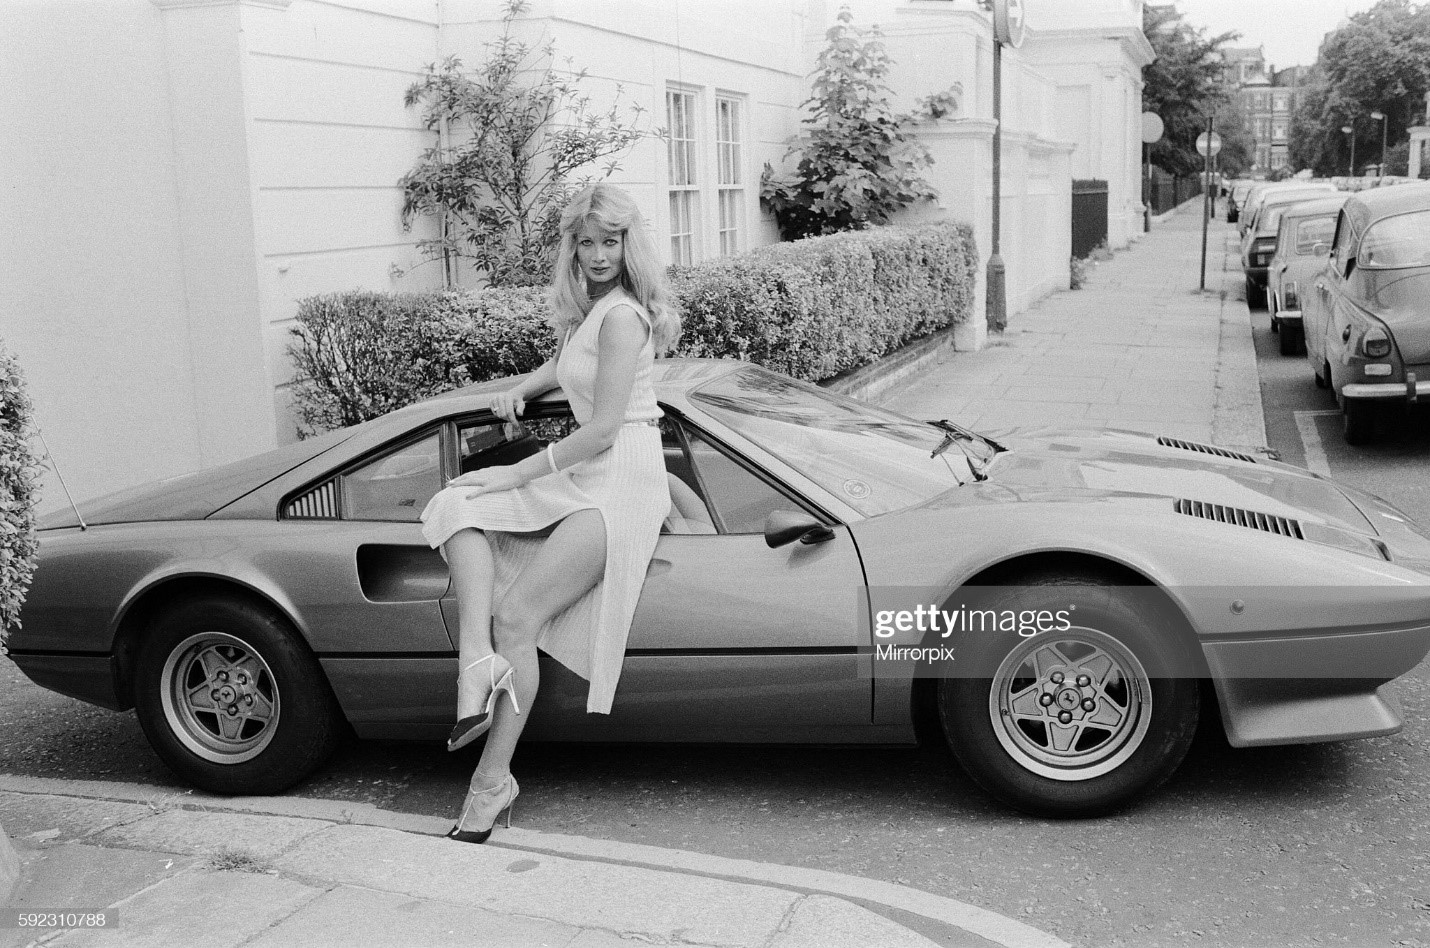 Glamour model Tina poses next to a Ferrari 308 GTB on 11 July 1979. 